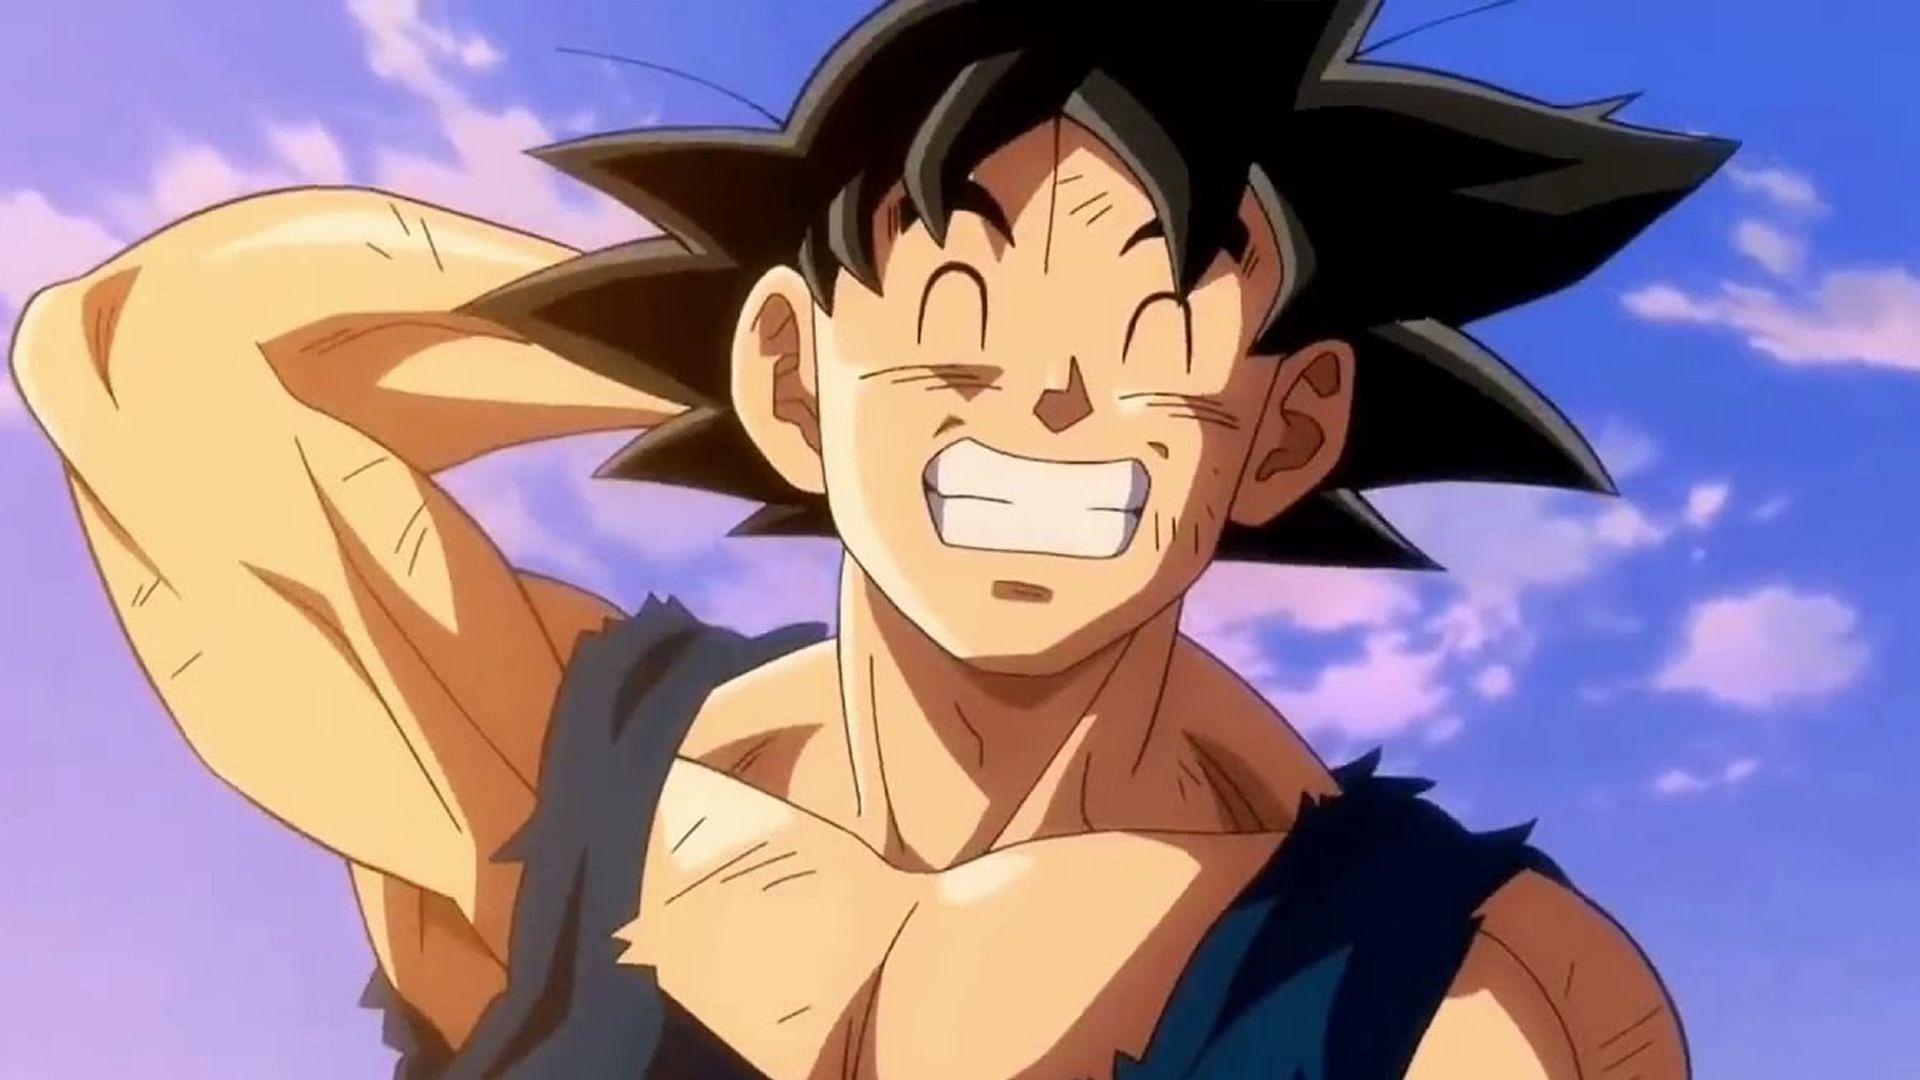 Goku smiling (Image via Toei Animation)